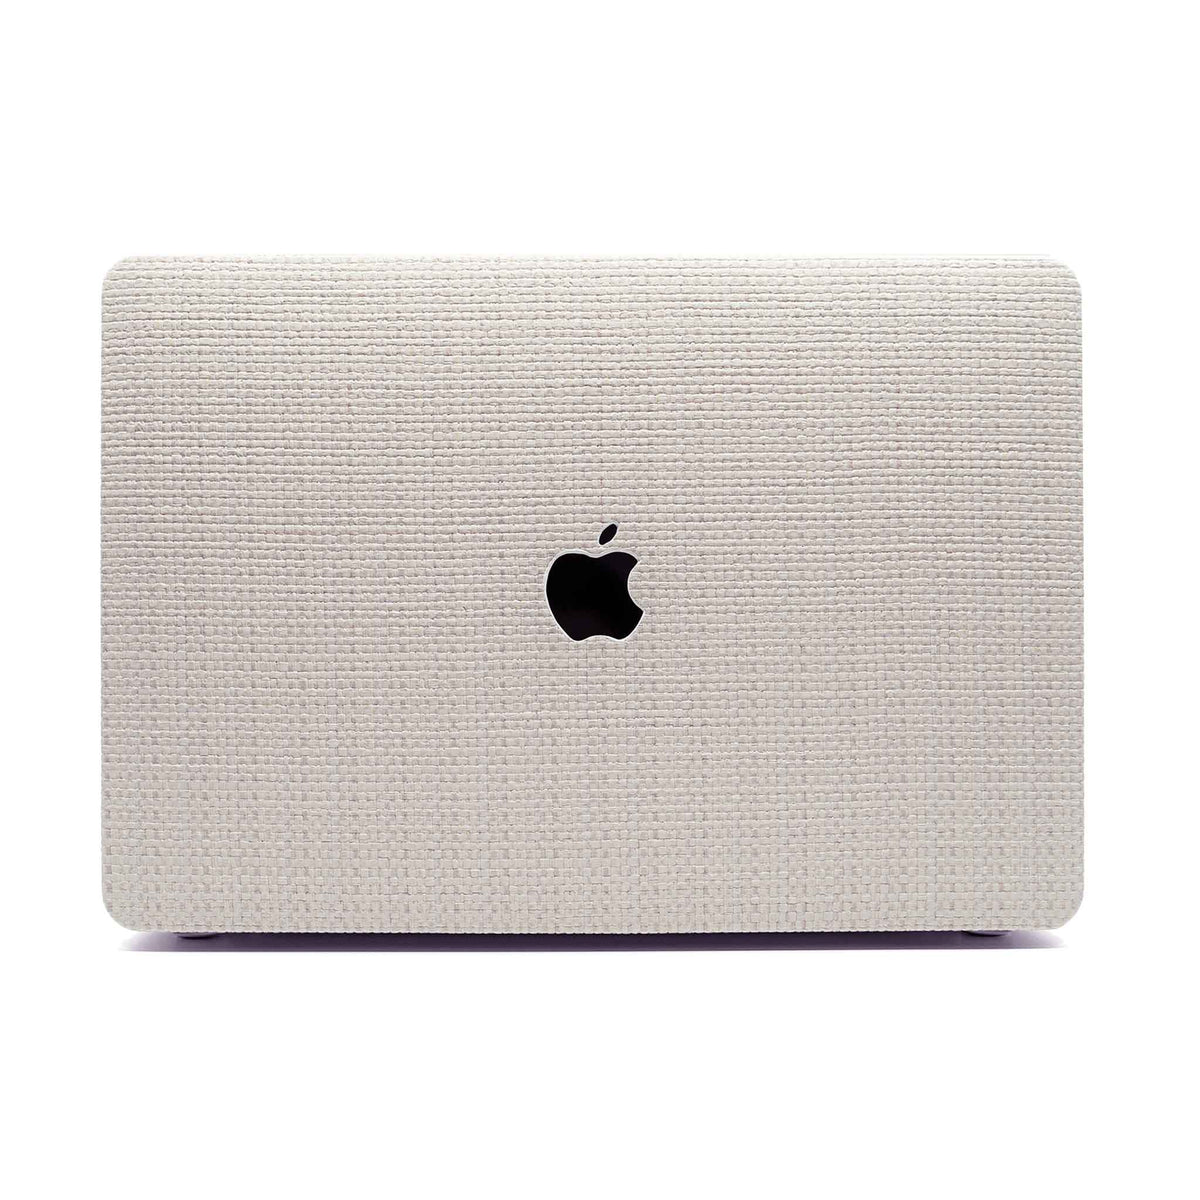 Laptop Bag 15 16 Inch - DSGN BRAND® FOAM156 - Apple MacBook Pro Laptop